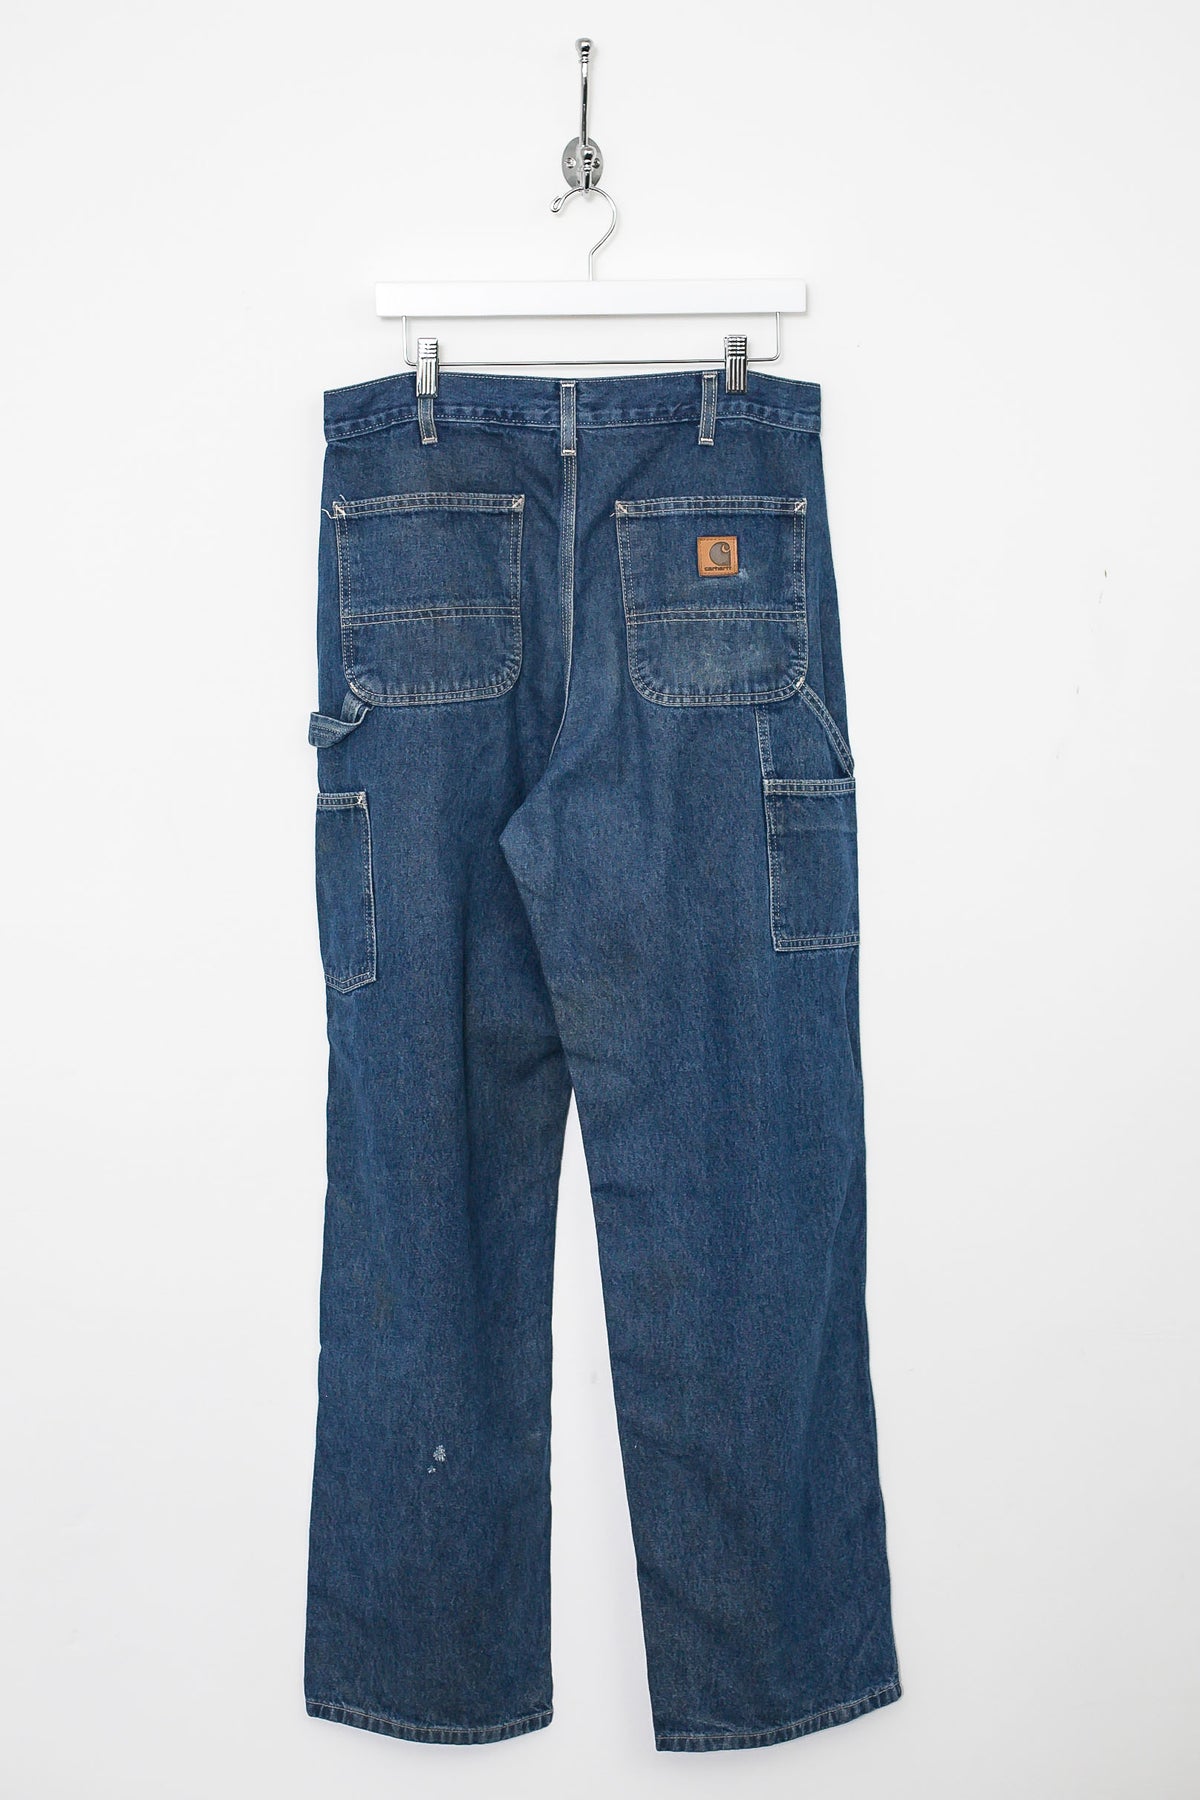 00s Carhartt Workwear Jeans (M)